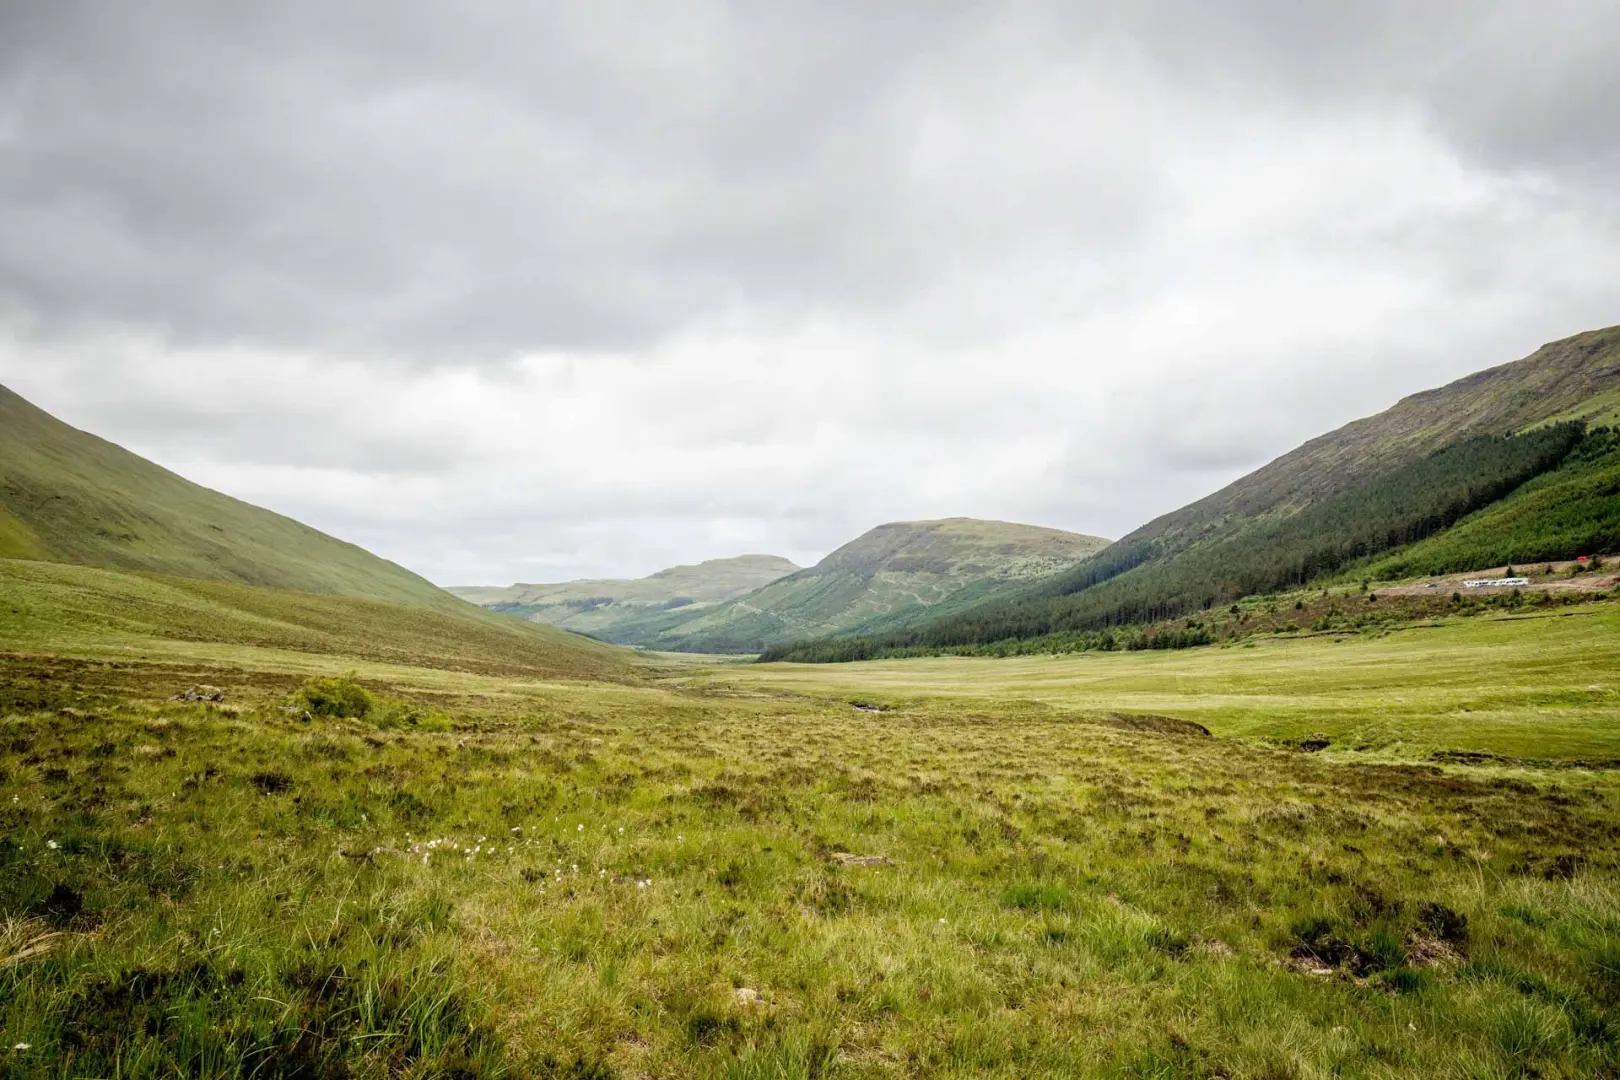 Adéntrate al corazón de la naturaleza, leyendas e historia de Escocia. Únete a este viaje a Escocia en grupo en el que, desde Edimburgo, recorrer la isla.